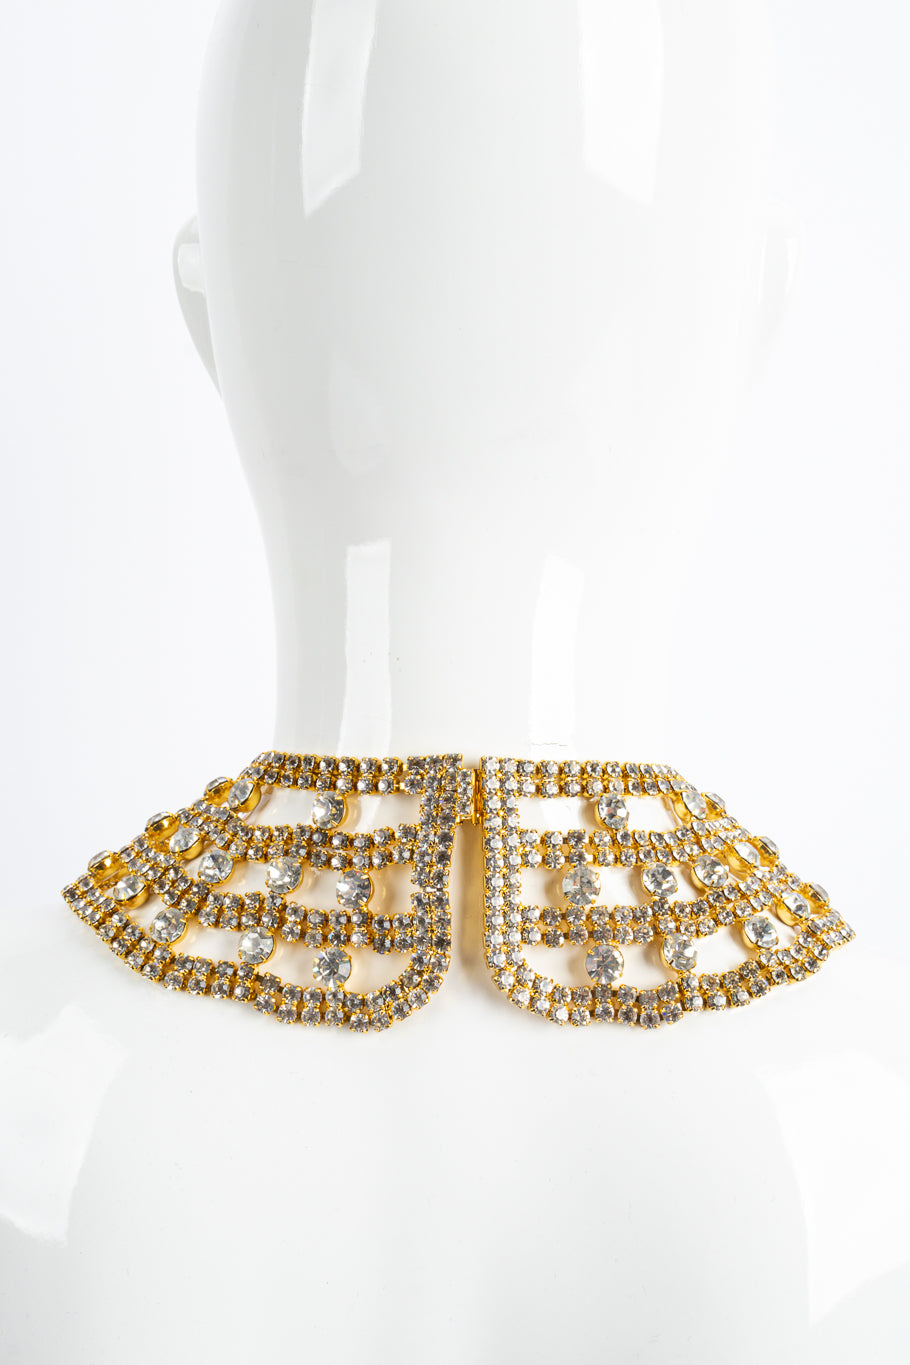 Rhinestone collar necklace by Weiss mannequin back @recessla